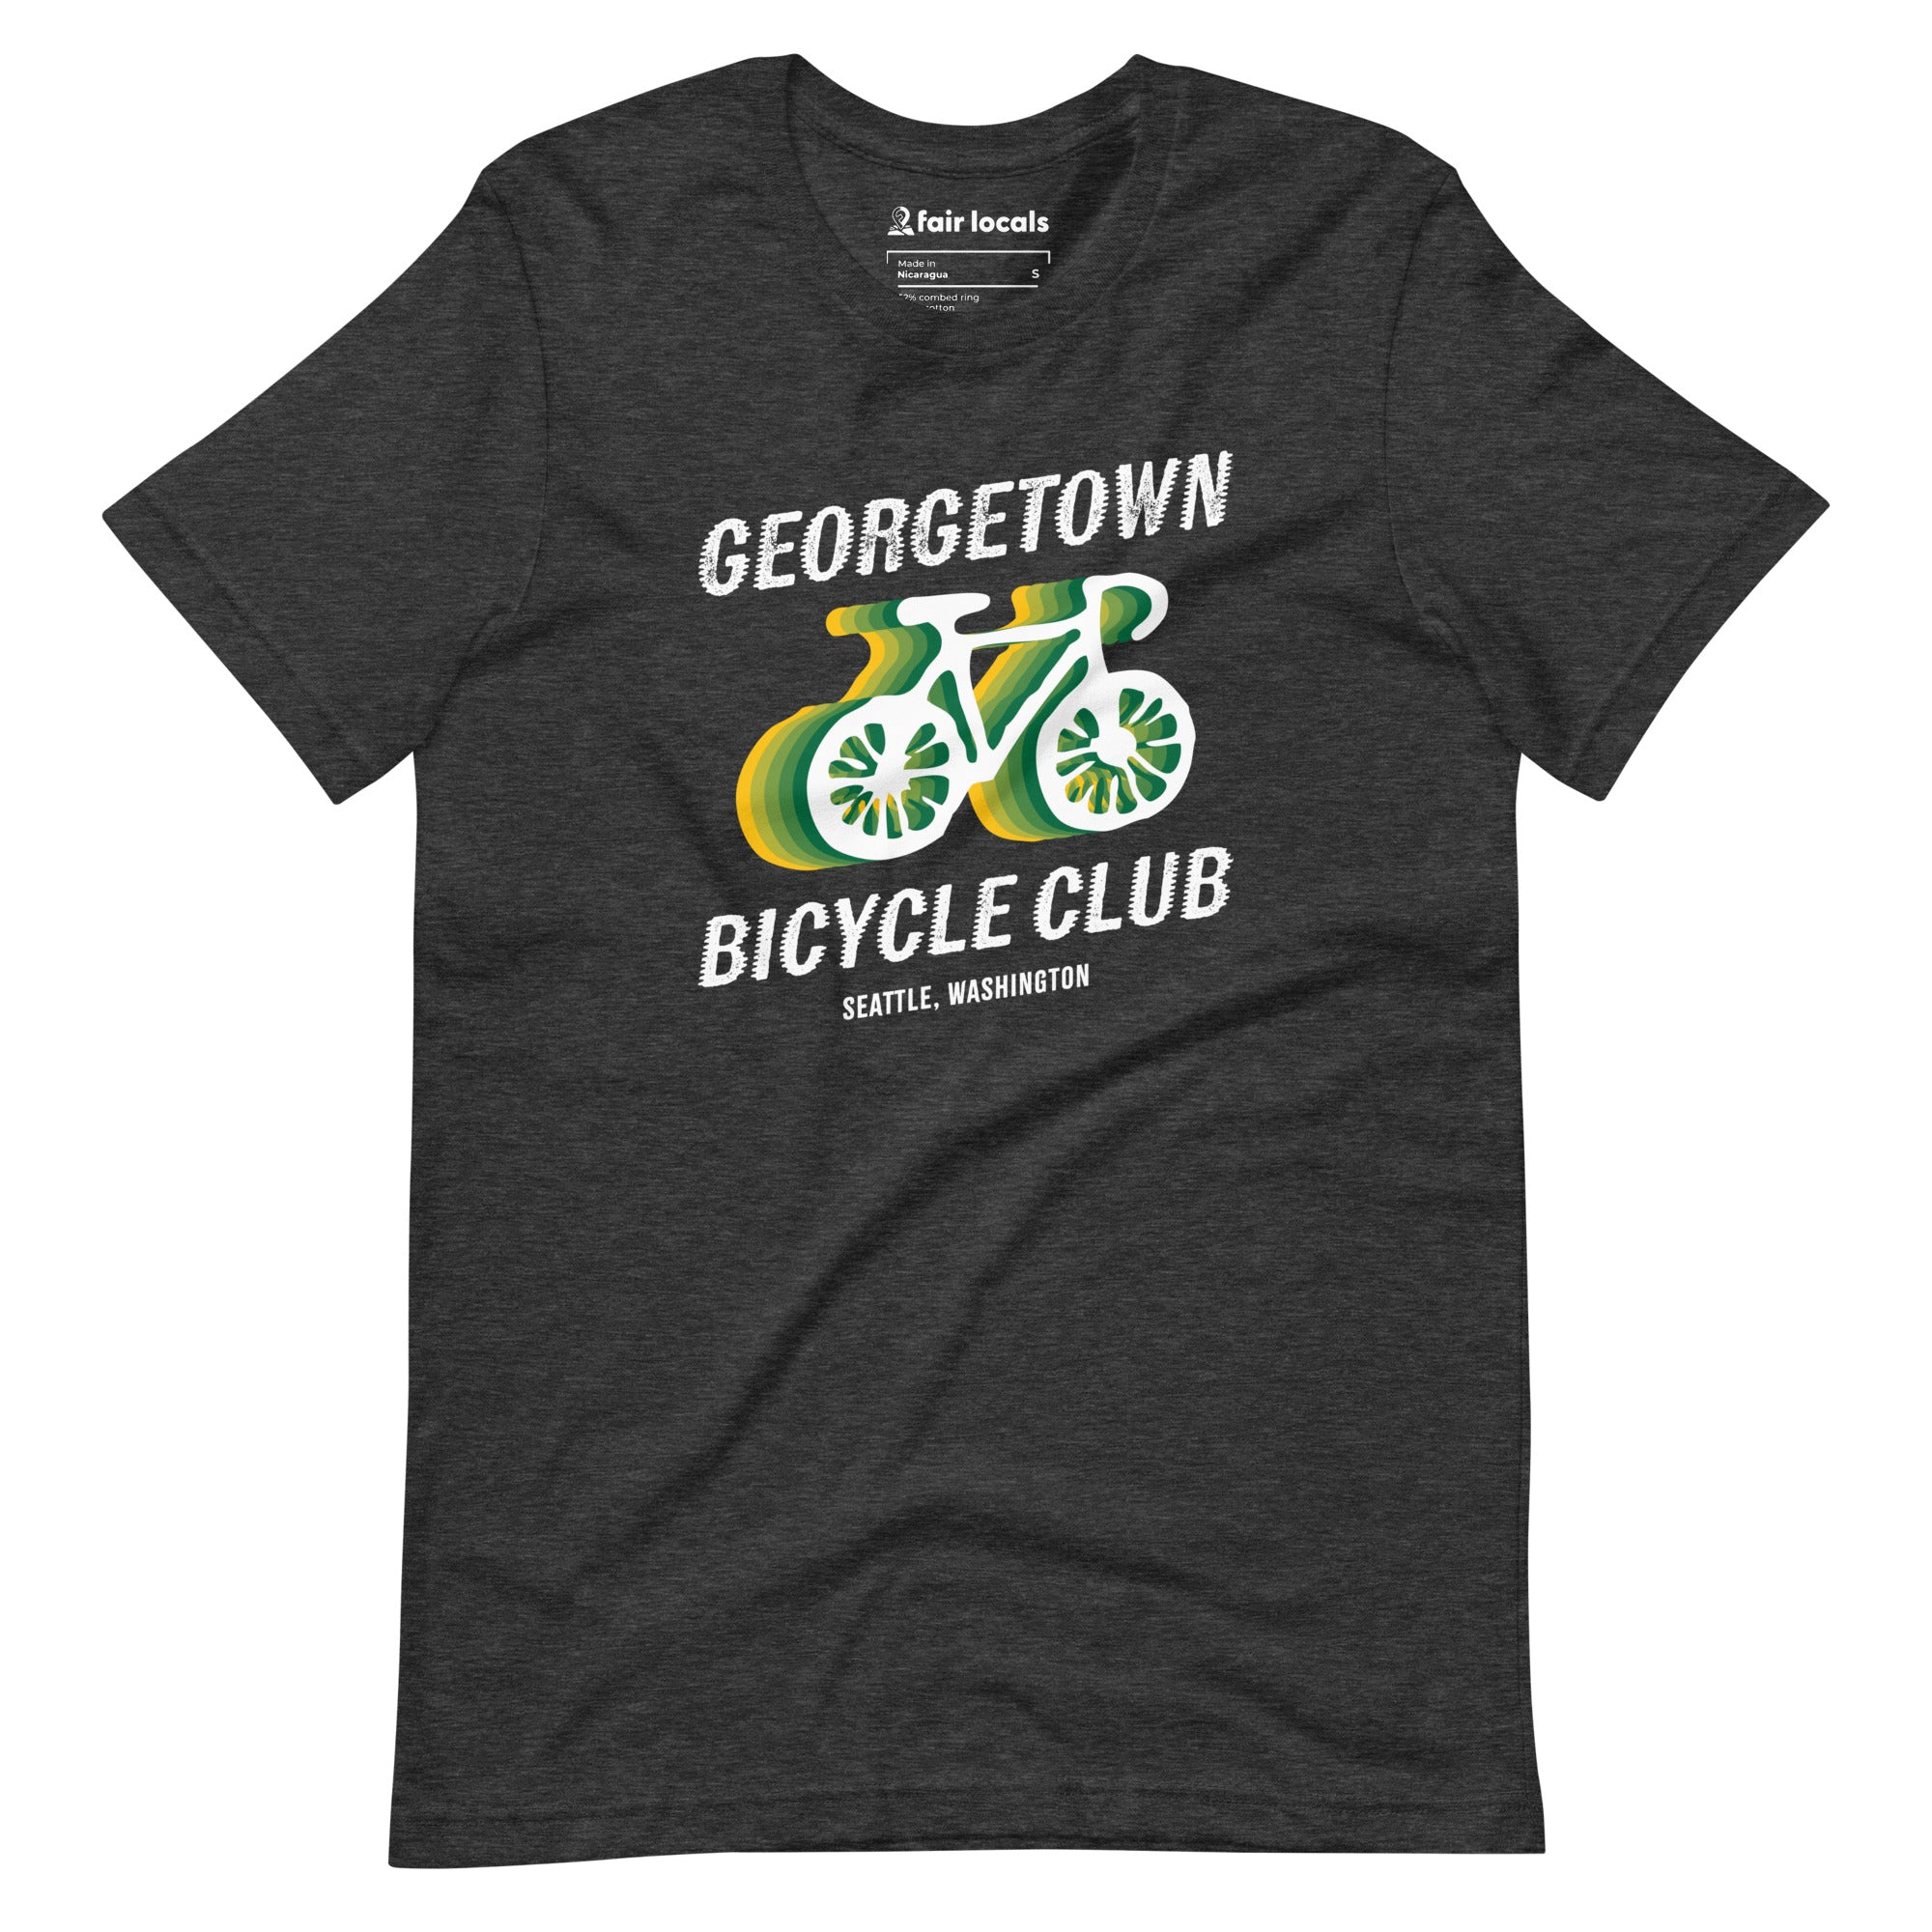 Bicycle Club T-Shirt - Georgetown | Seattle, WA